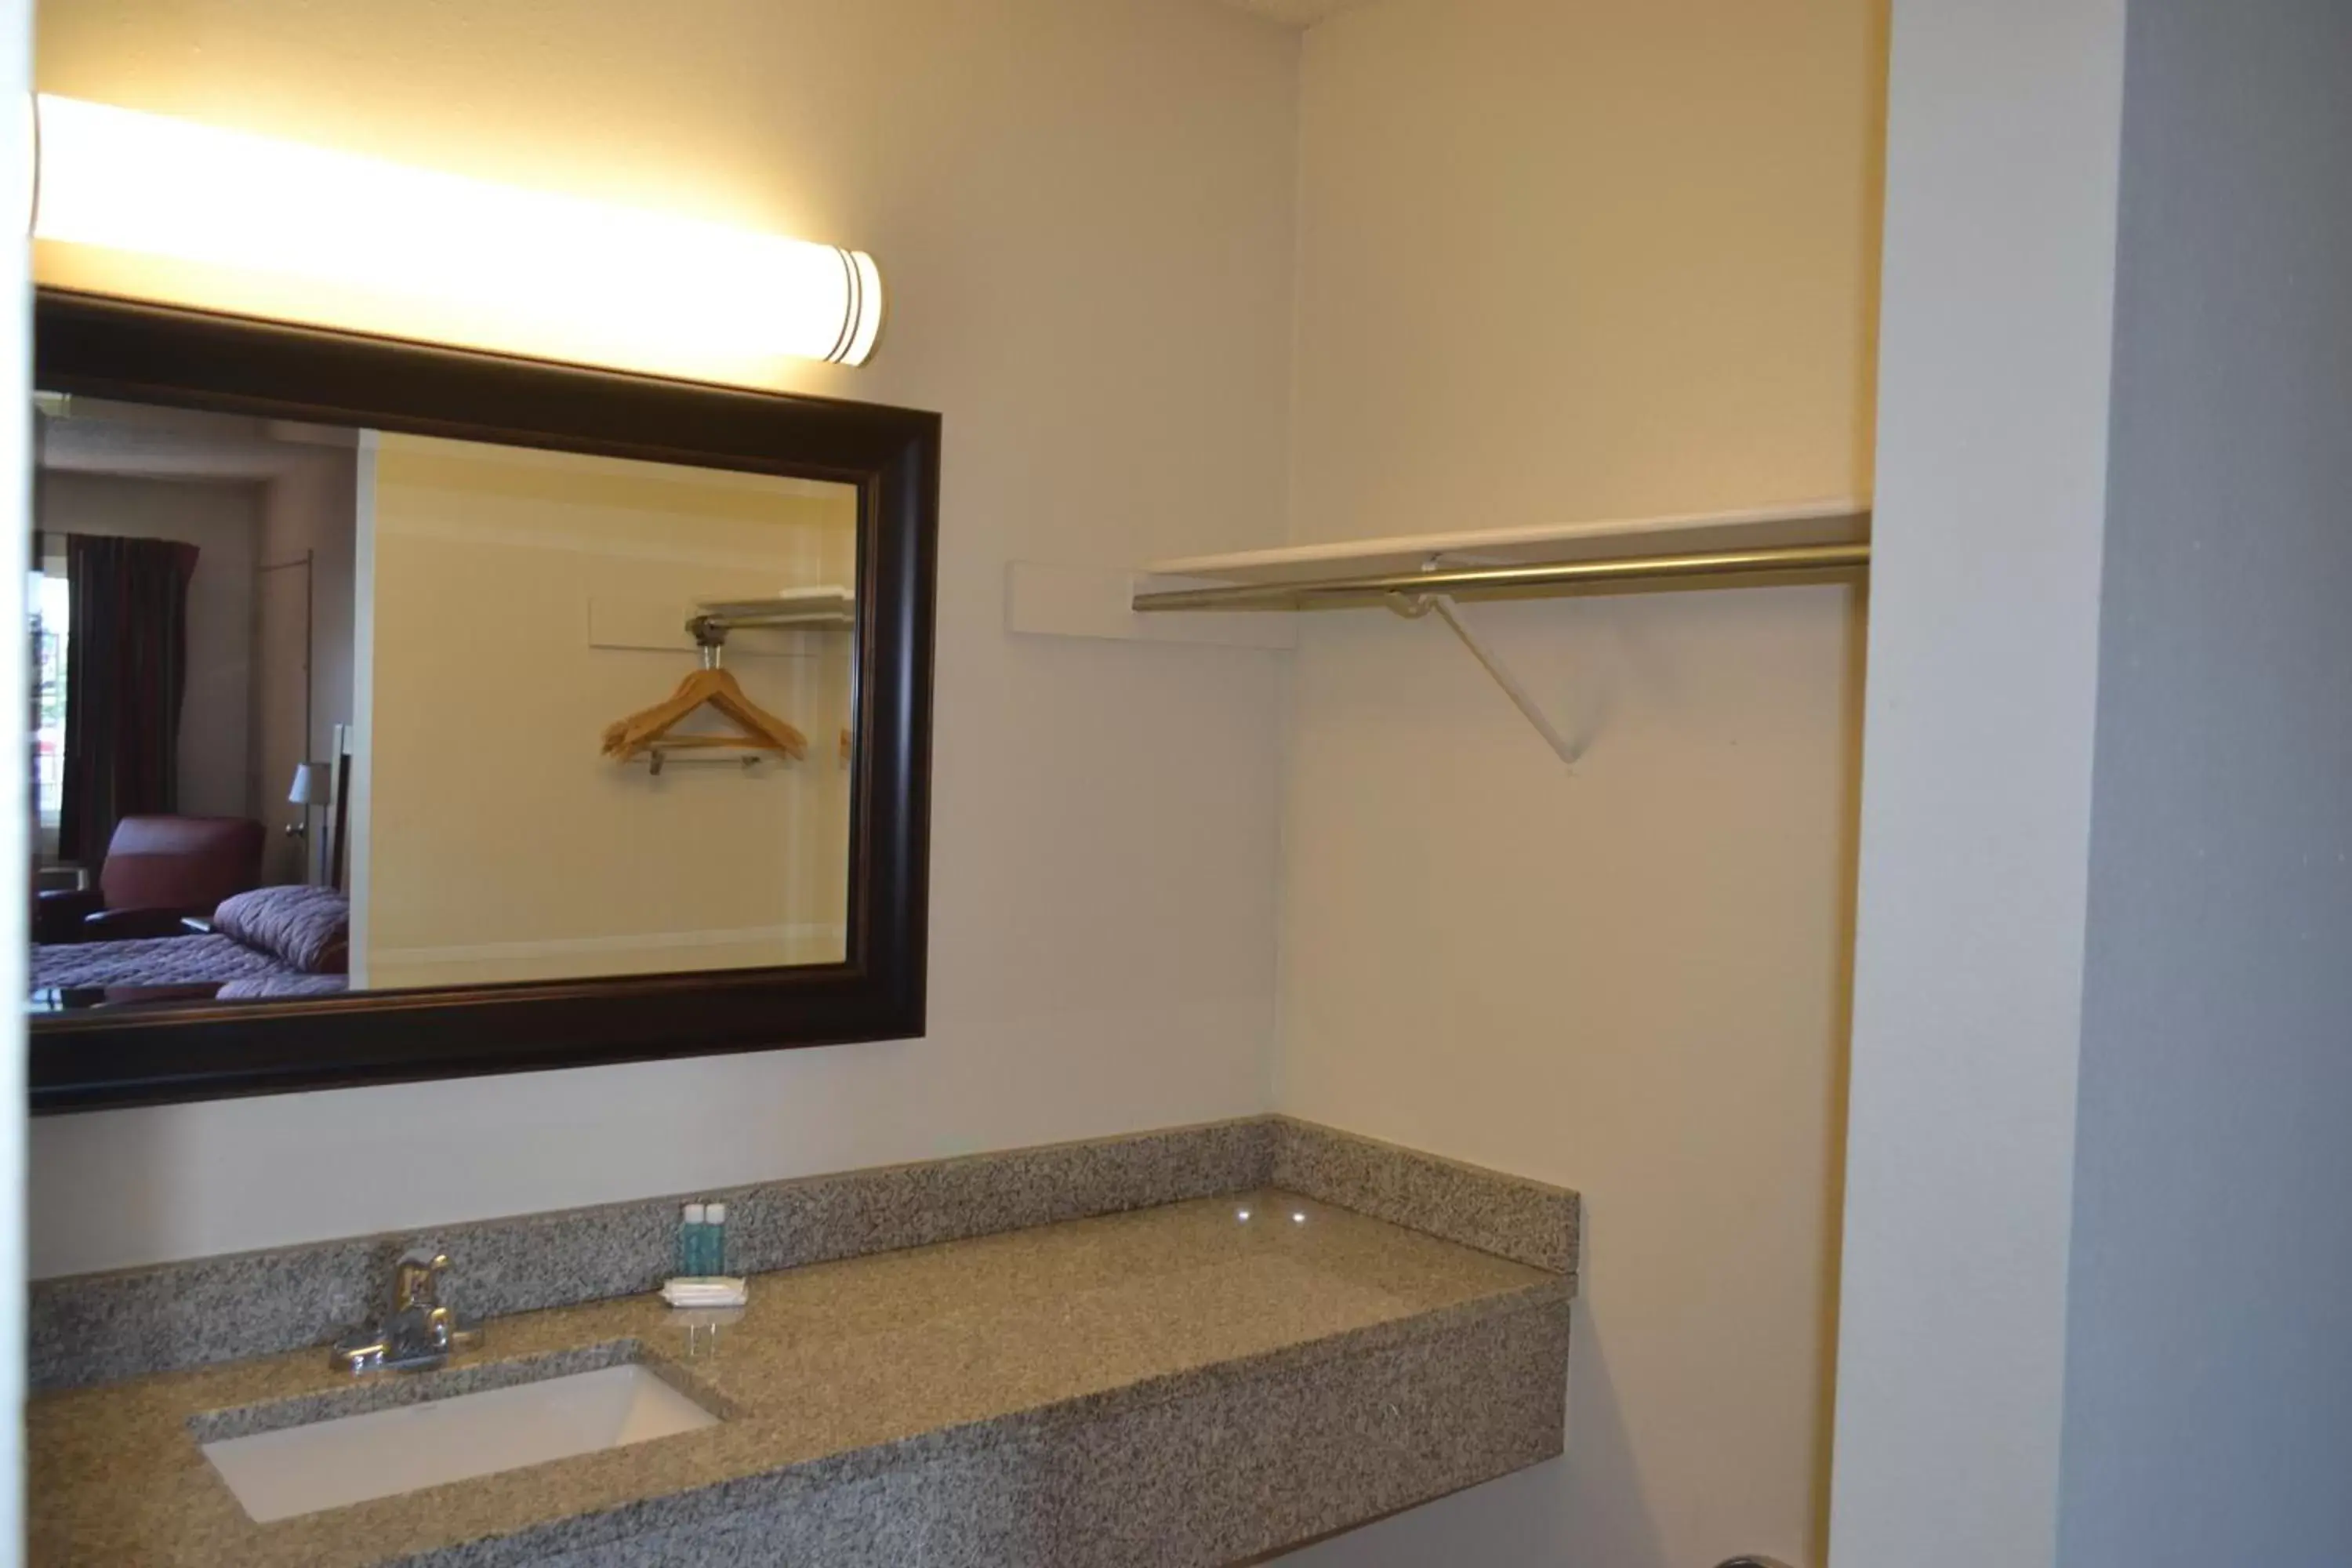 Bathroom in Skyway Inn - Seatac